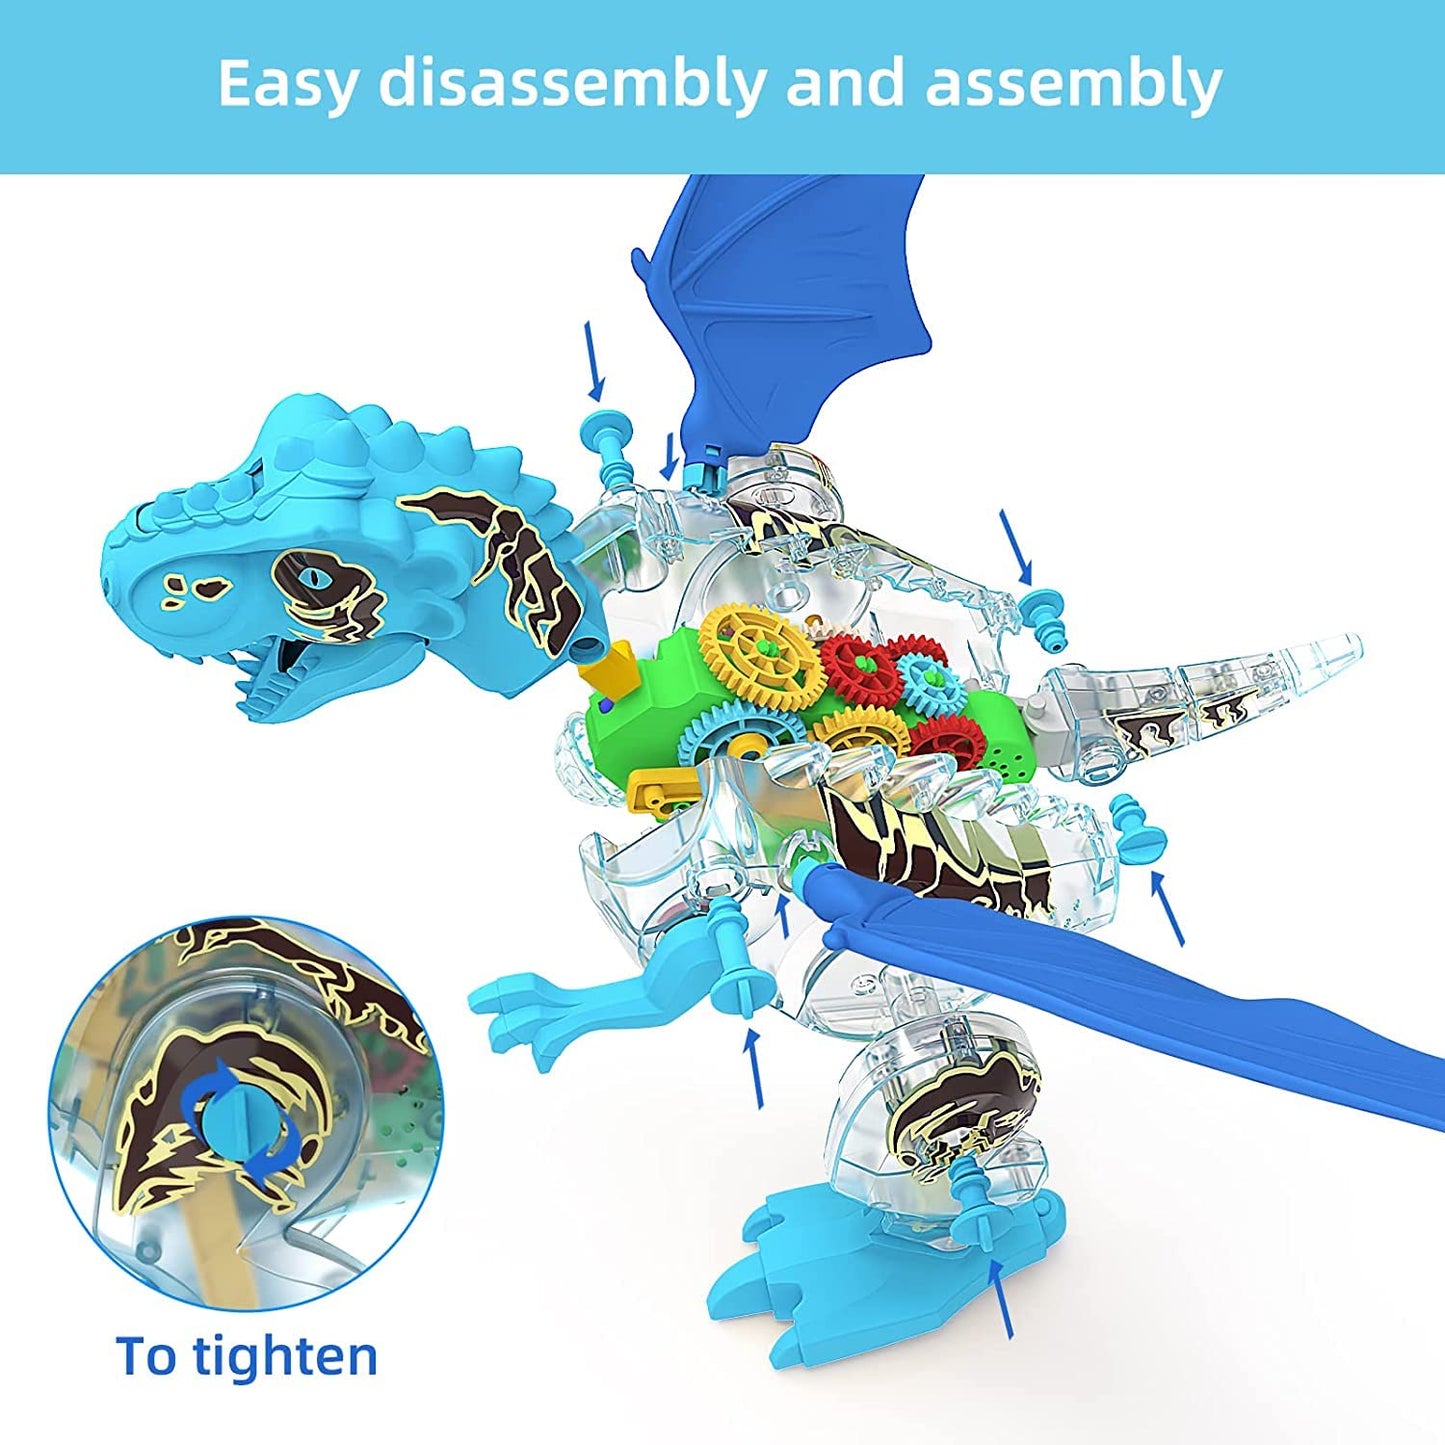 Dinosaur Toys For Kids, Jurassic World Toys, Electronic Walking Dinosaur With Spray And Lighting, Dinosaur Figures